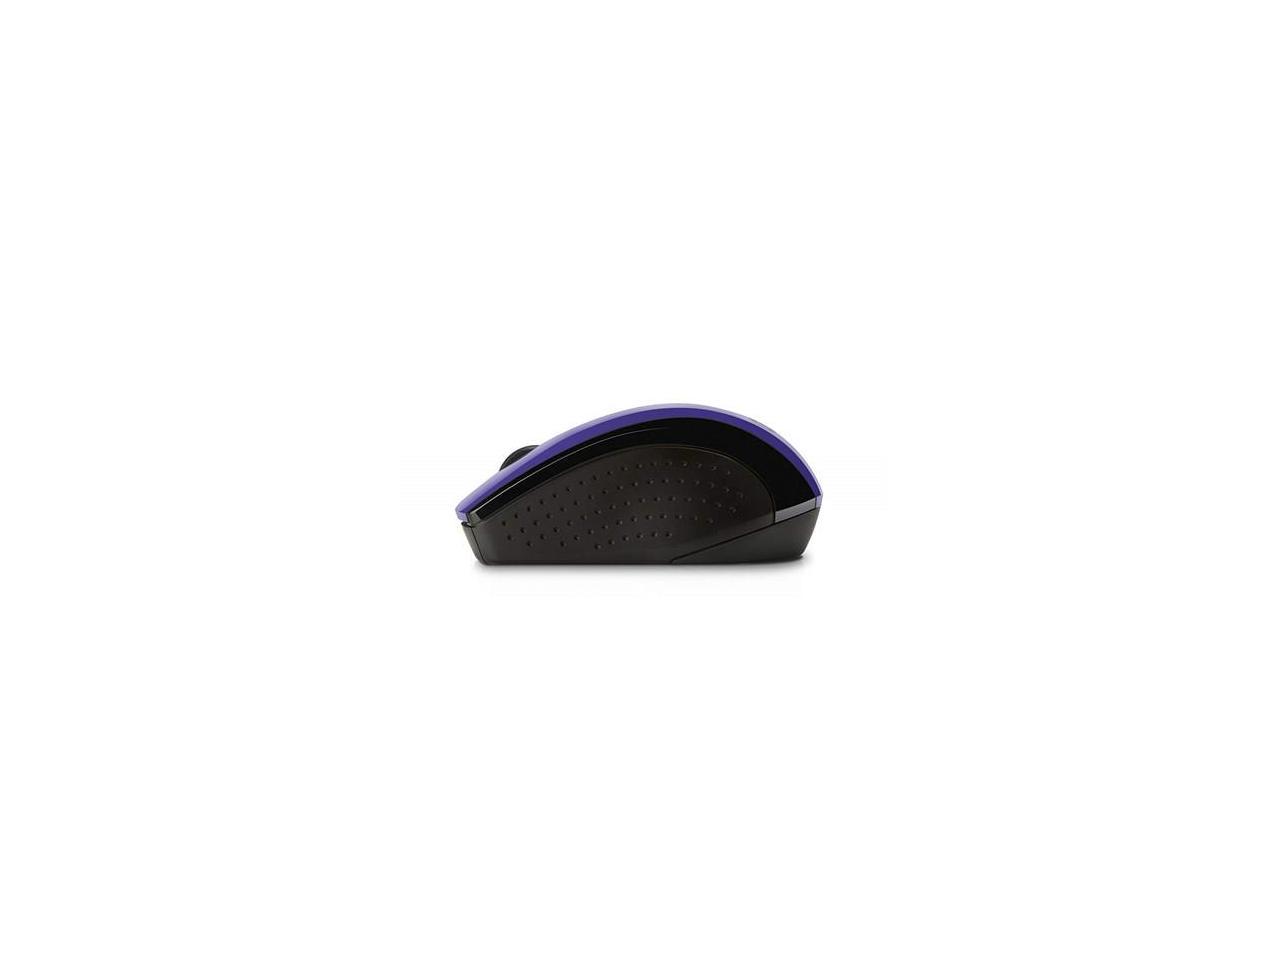 HP X3000 Purple Wireless Mouse